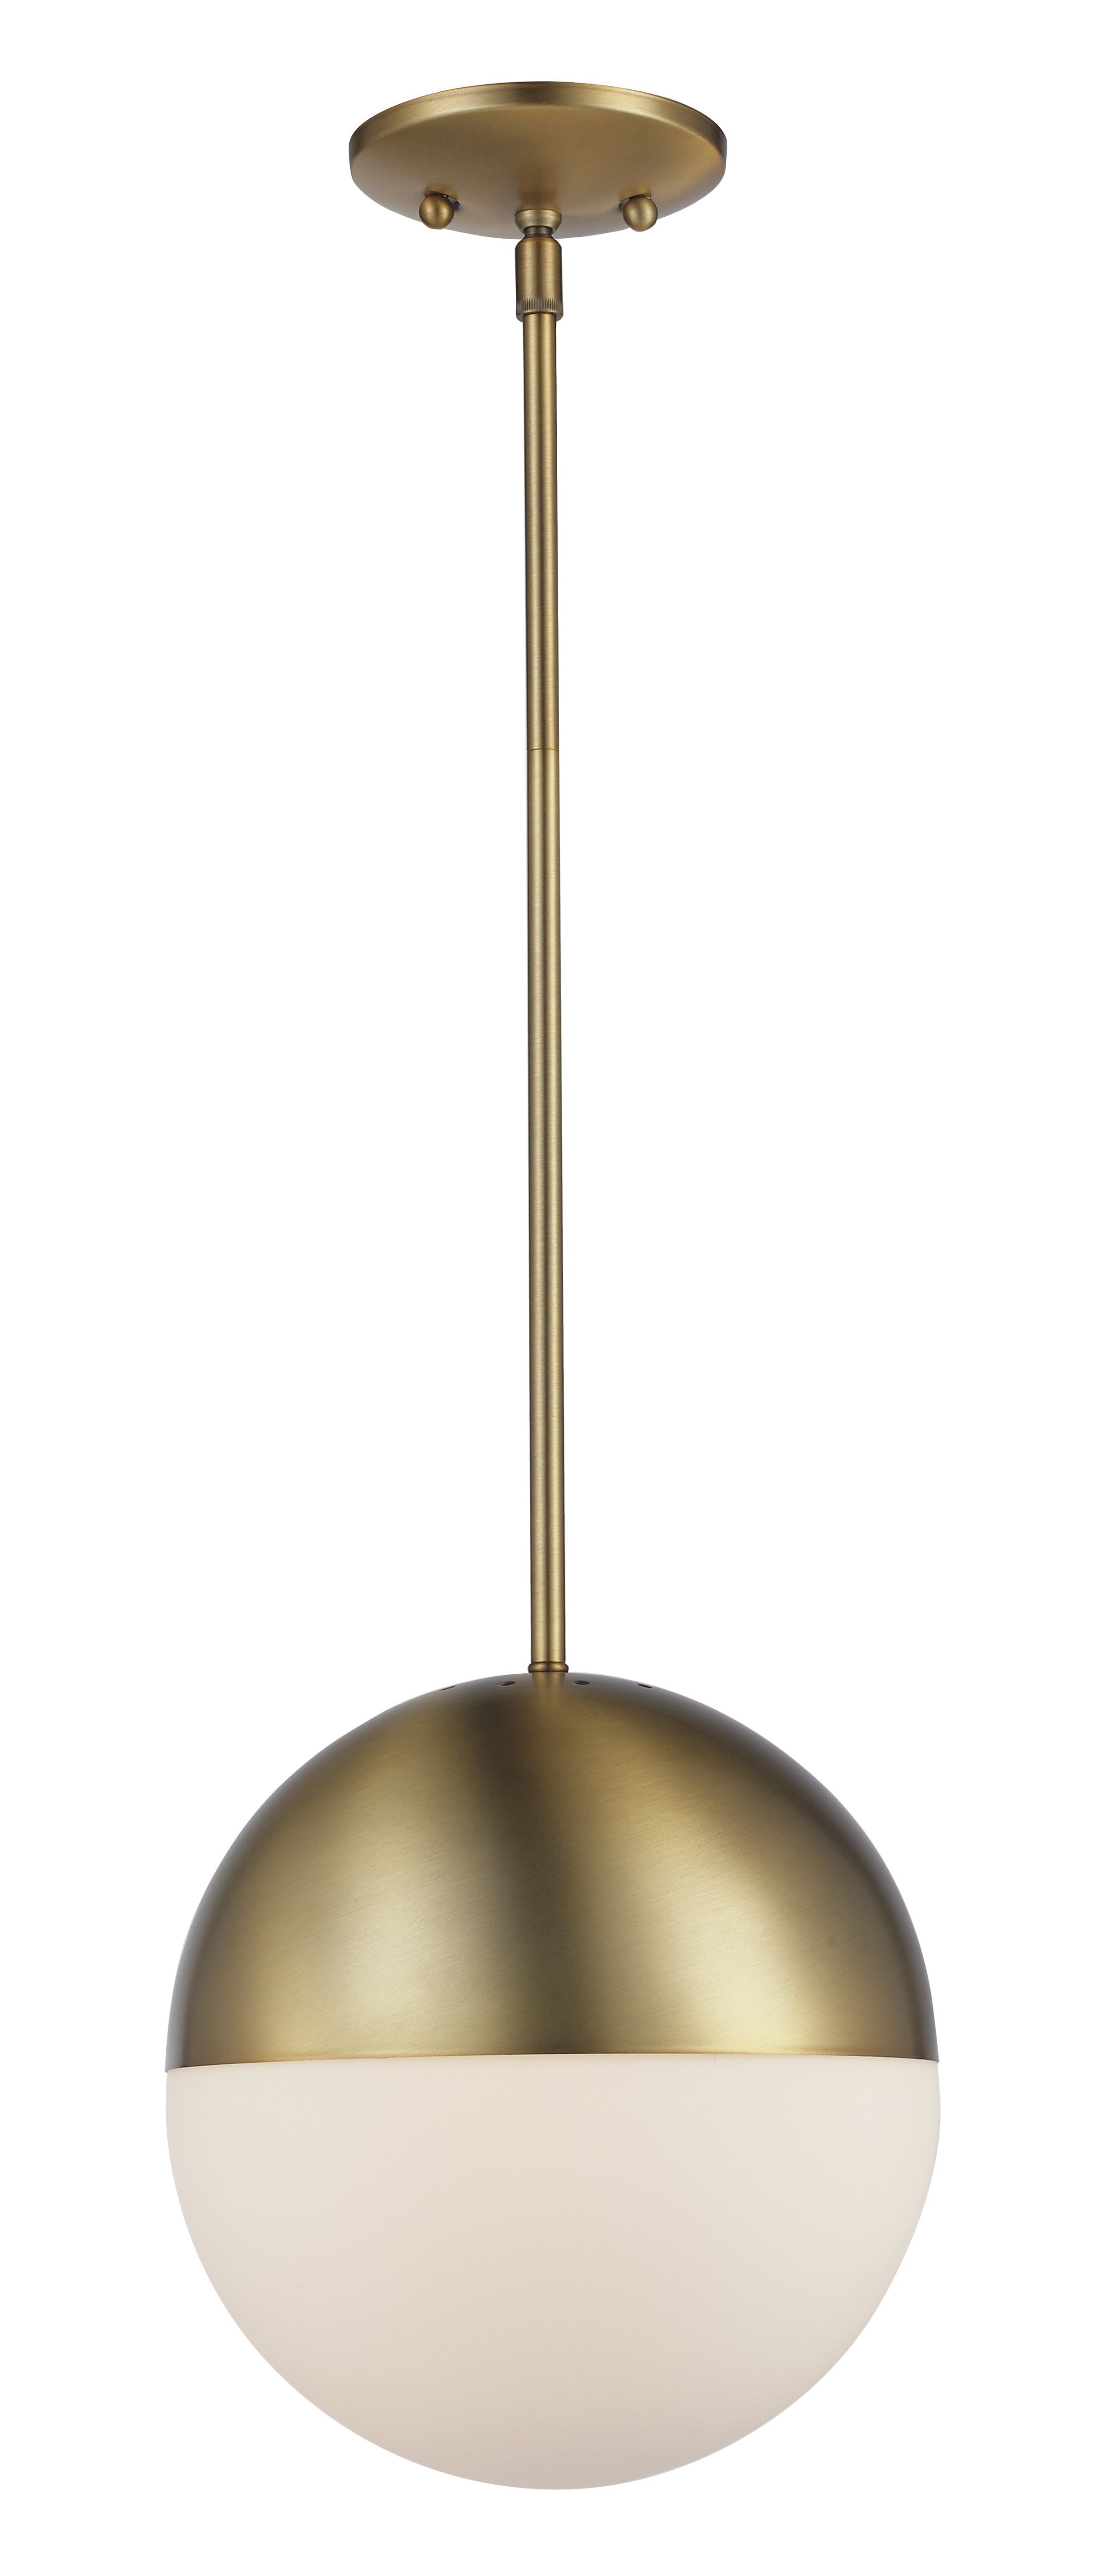 Bautista 1 Light Single Globe Pendants Intended For Newest Rolando 1 Light Single Globe Pendant (View 9 of 25)